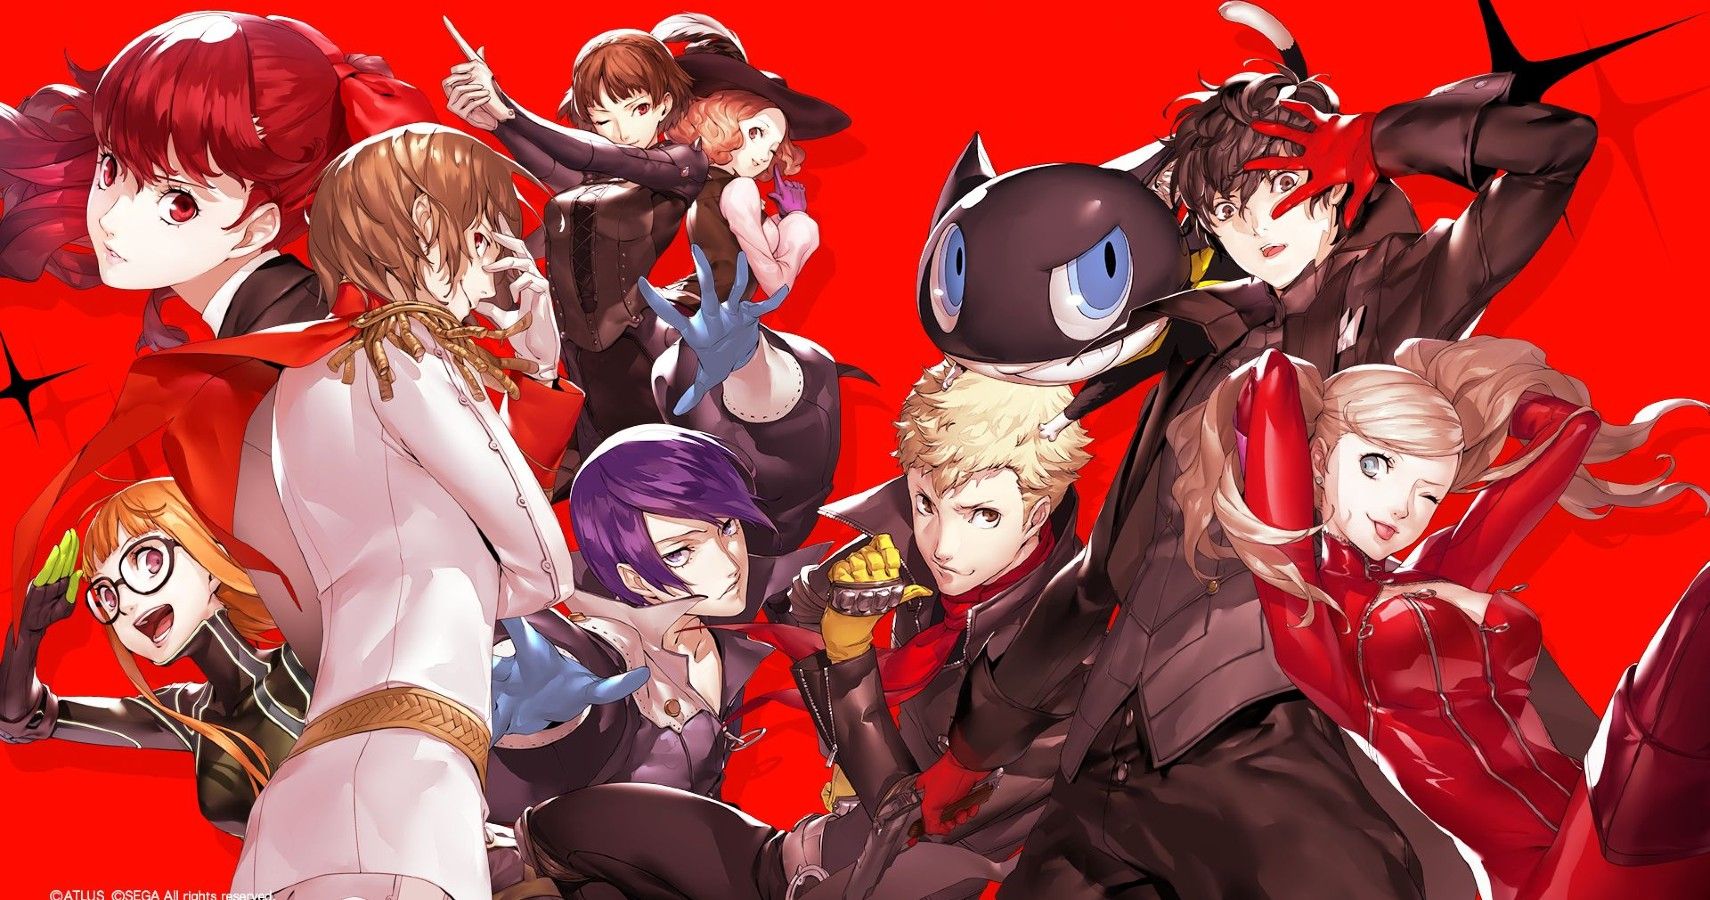 Persona 5 Royal: Every Playable Character, Ranked | Game Rant